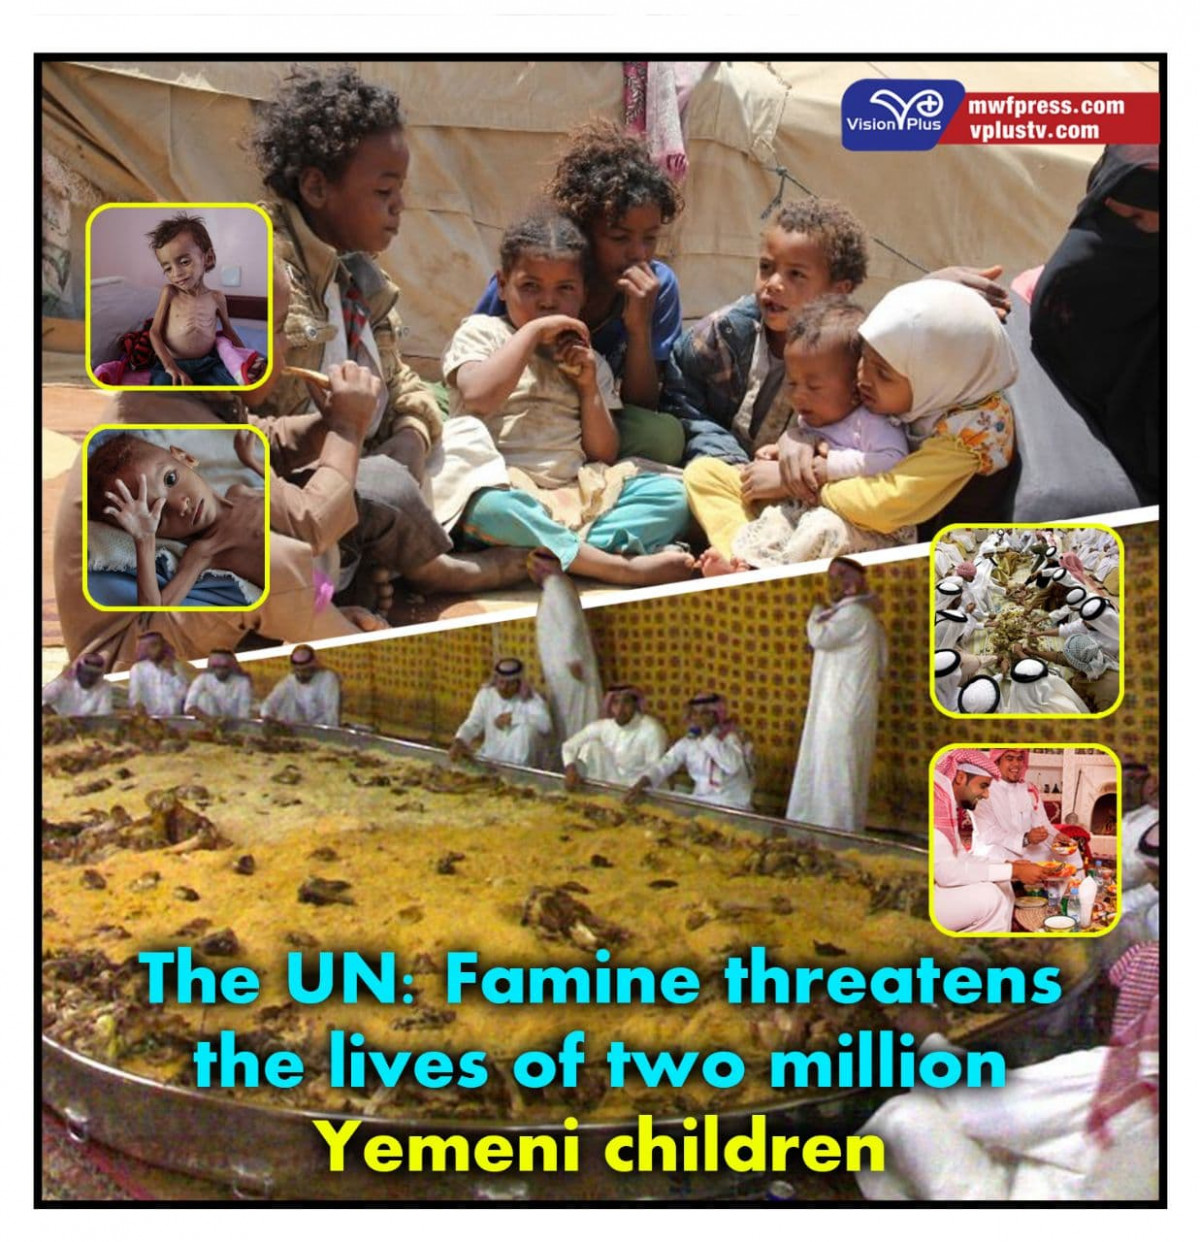 The UN: Famine threatens the lives of two million Yemeni children